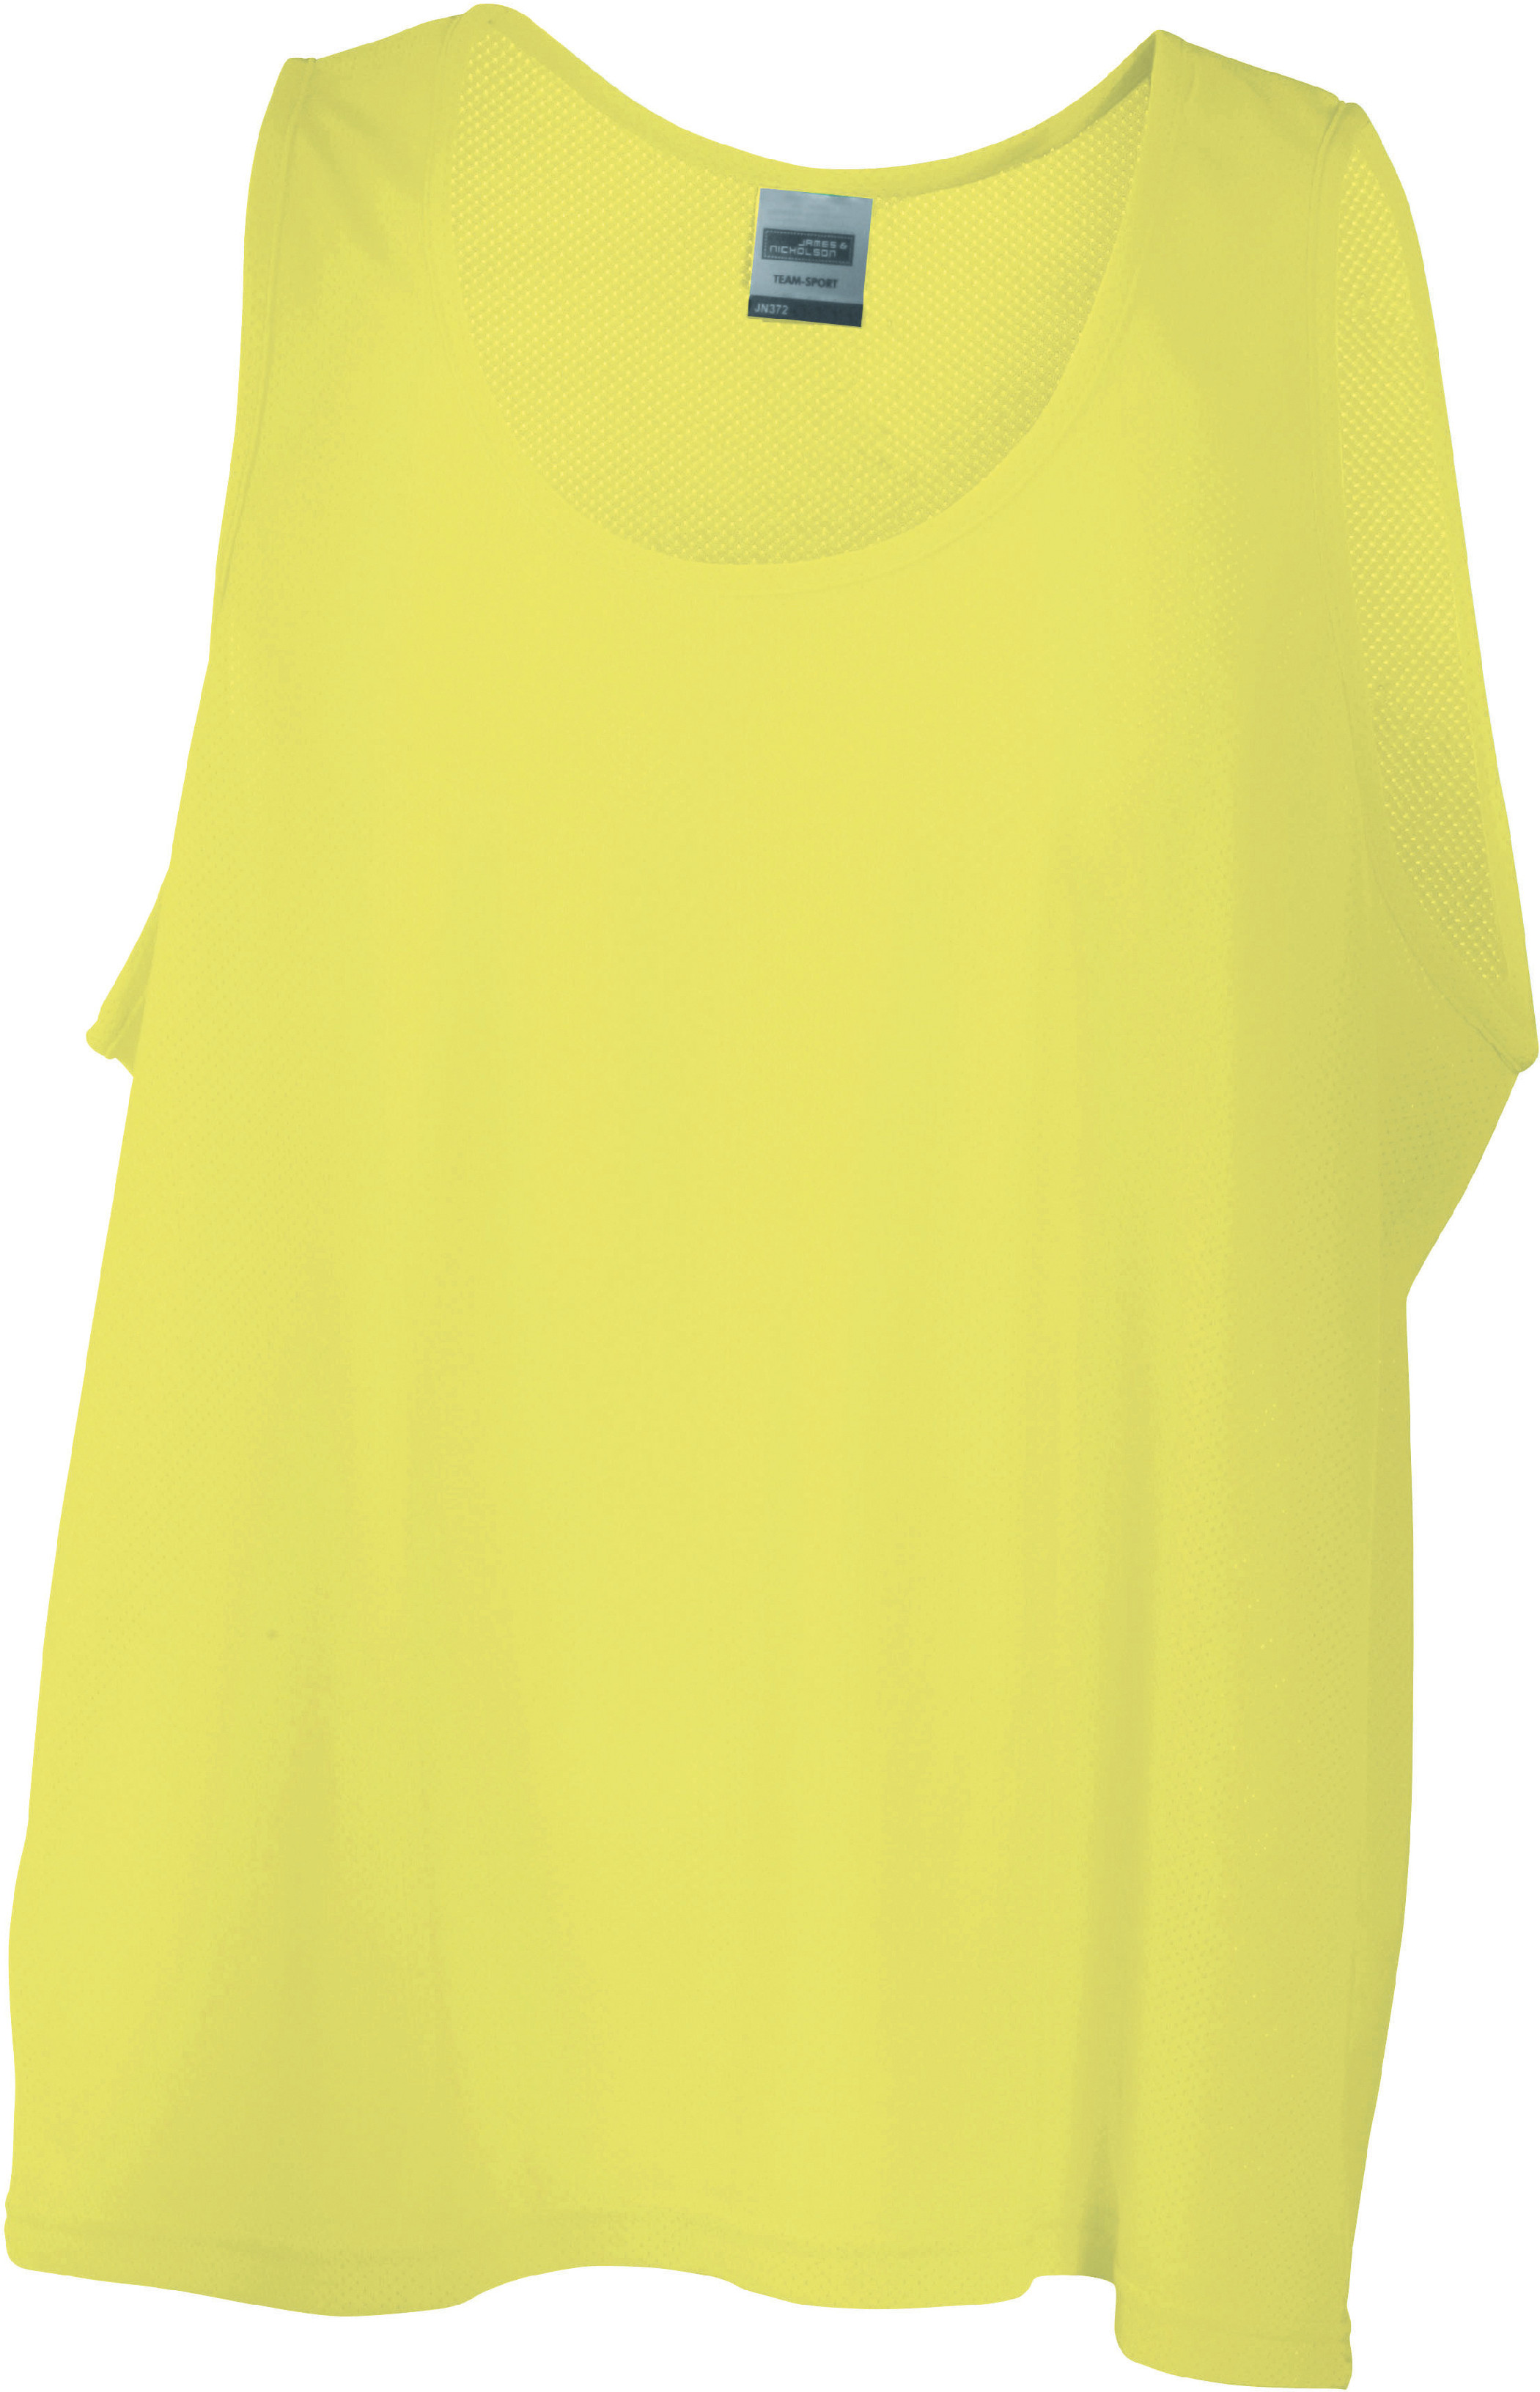 Týmový rozlišovací dres JN 372 Barva: žlutá, Velikost: S